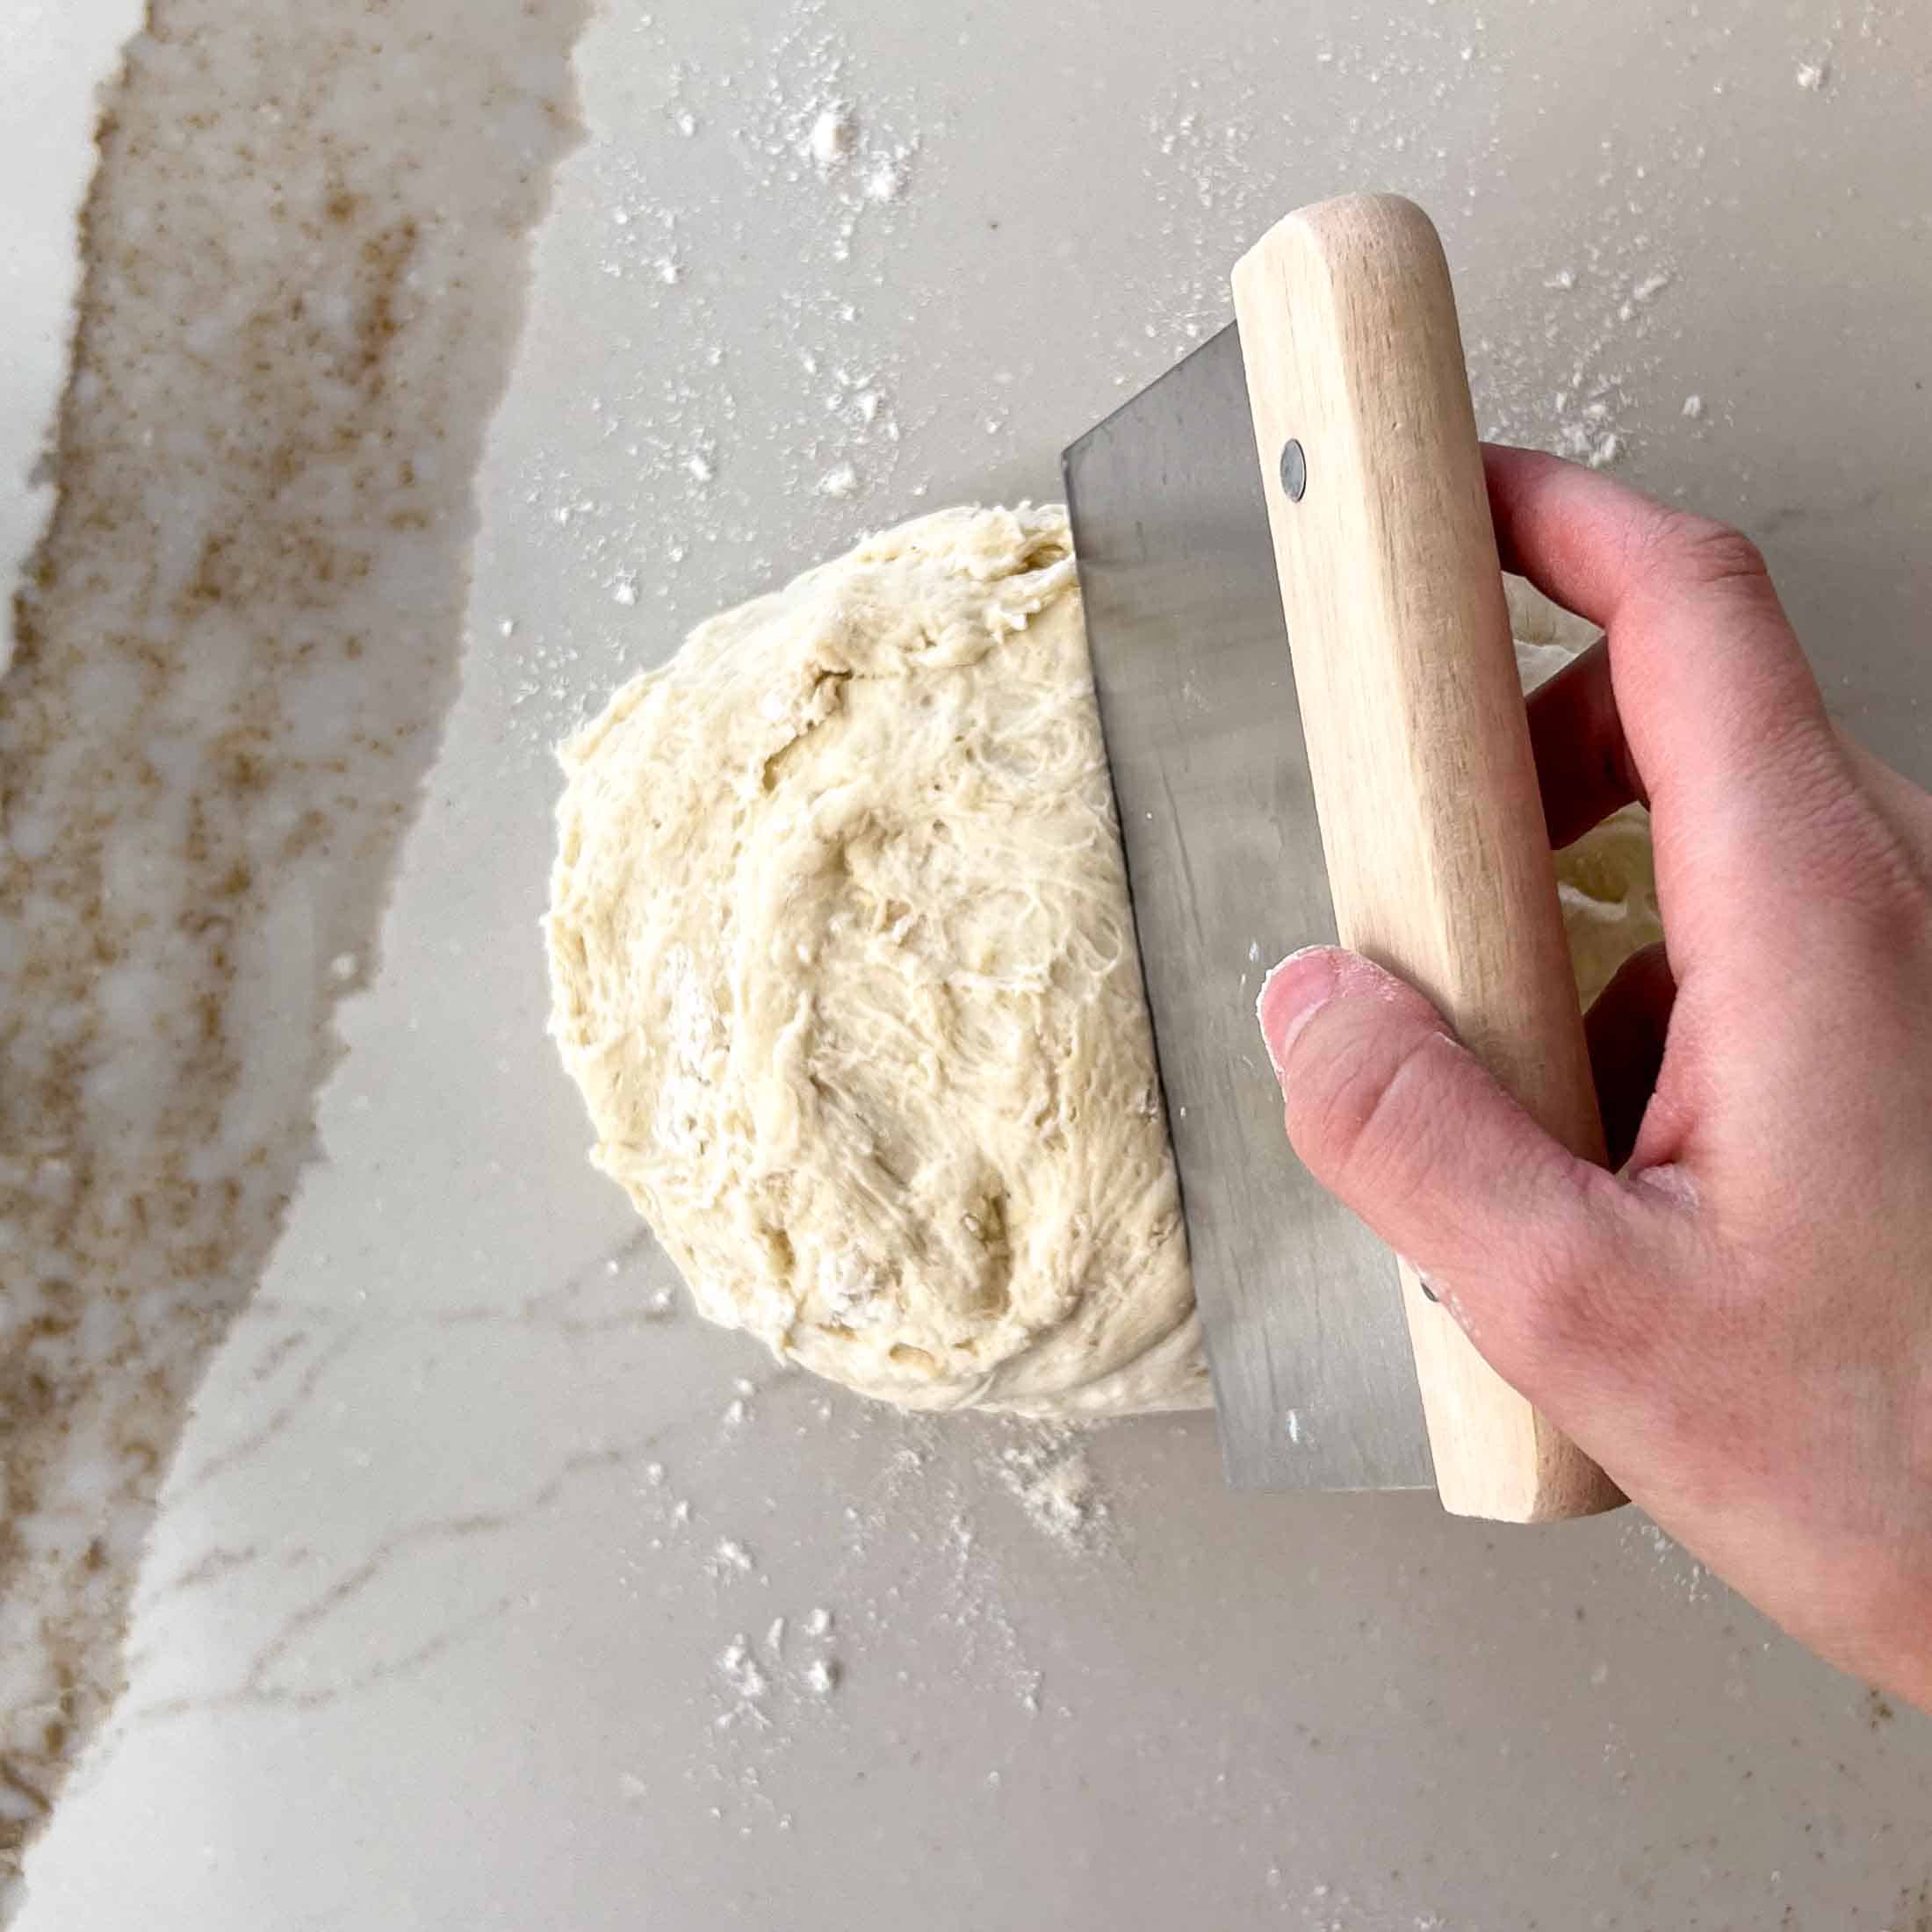 A bench scraper cutting into a ball of dough.